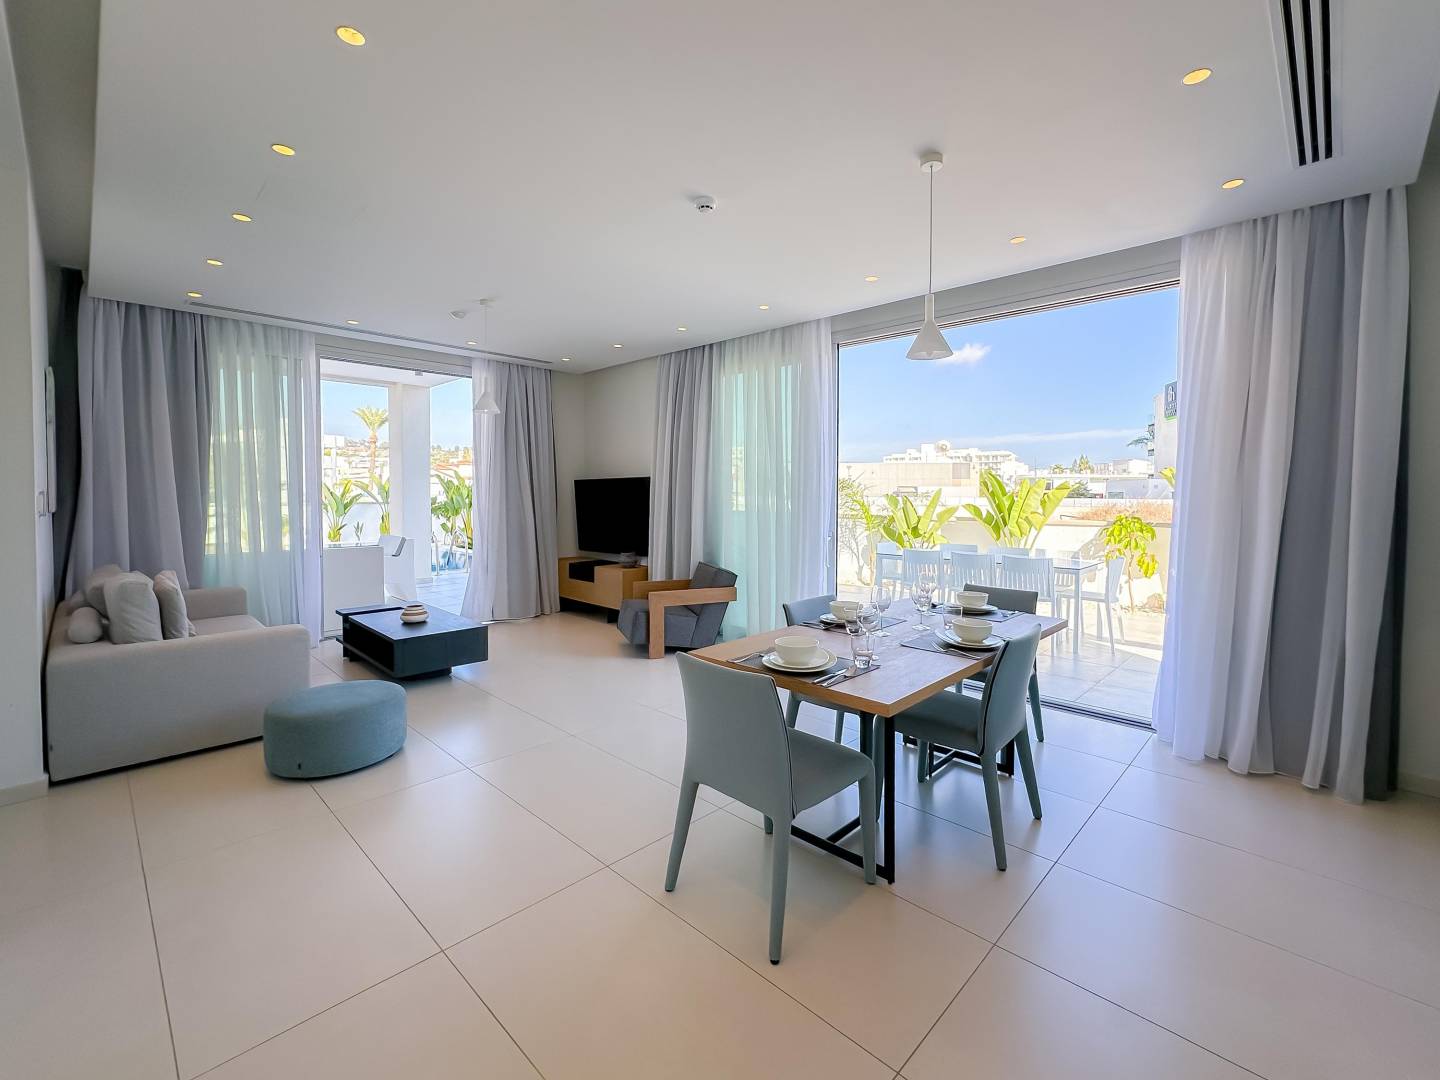 4 Bedroom Villa for Sale in Famagusta – Agia Napa